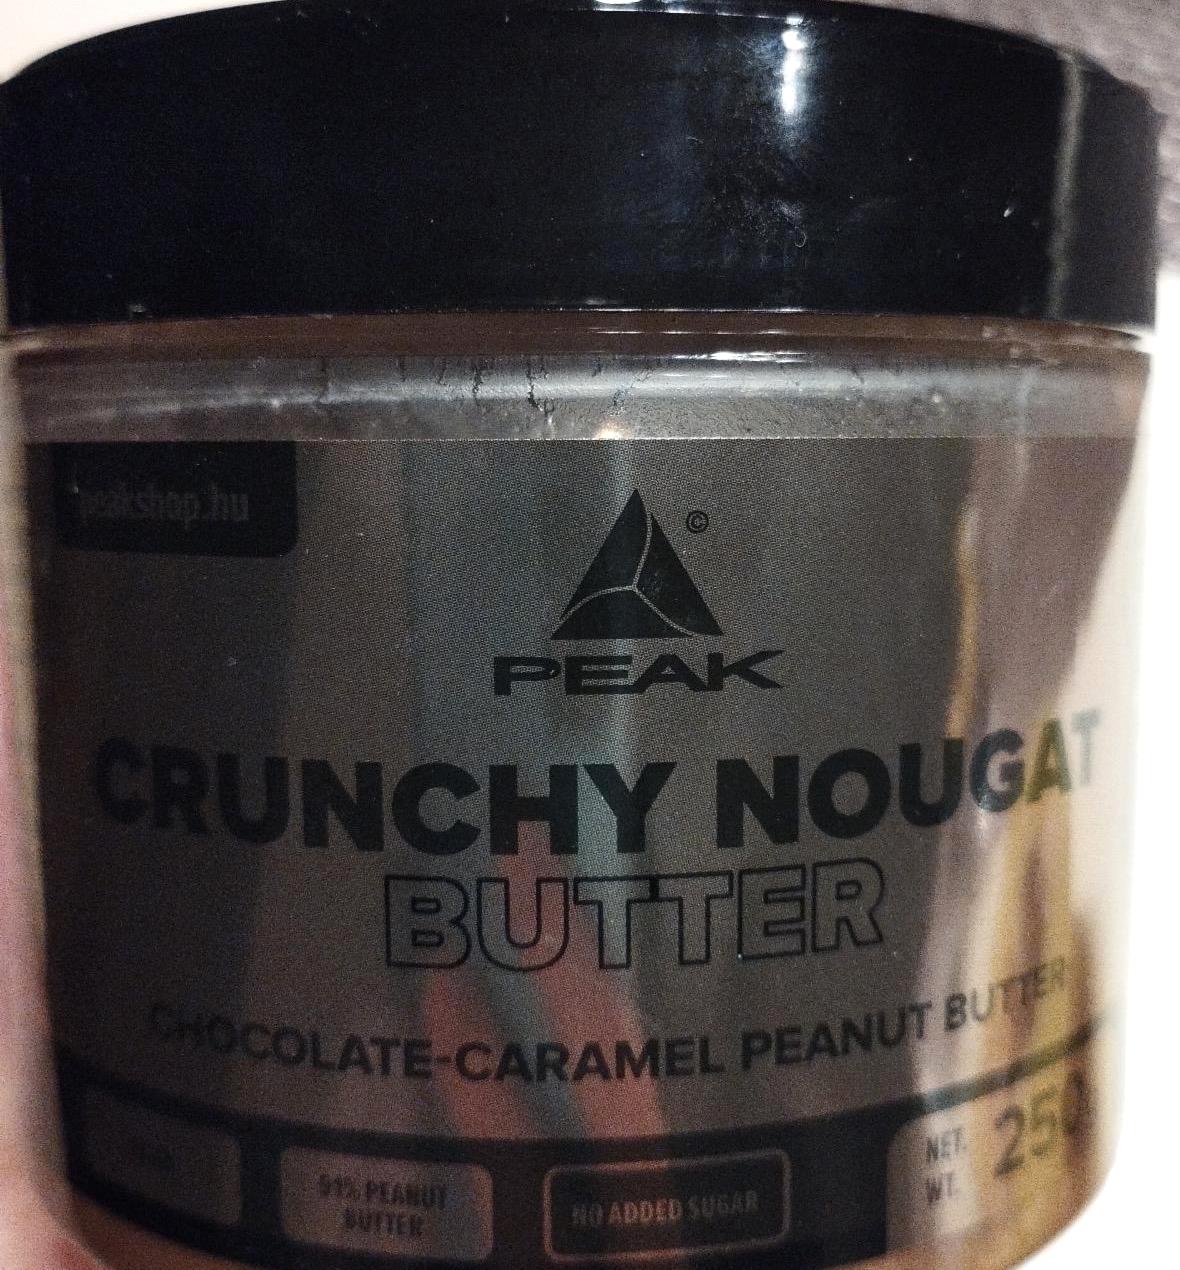 Képek - Crunchy nougat butter Peak